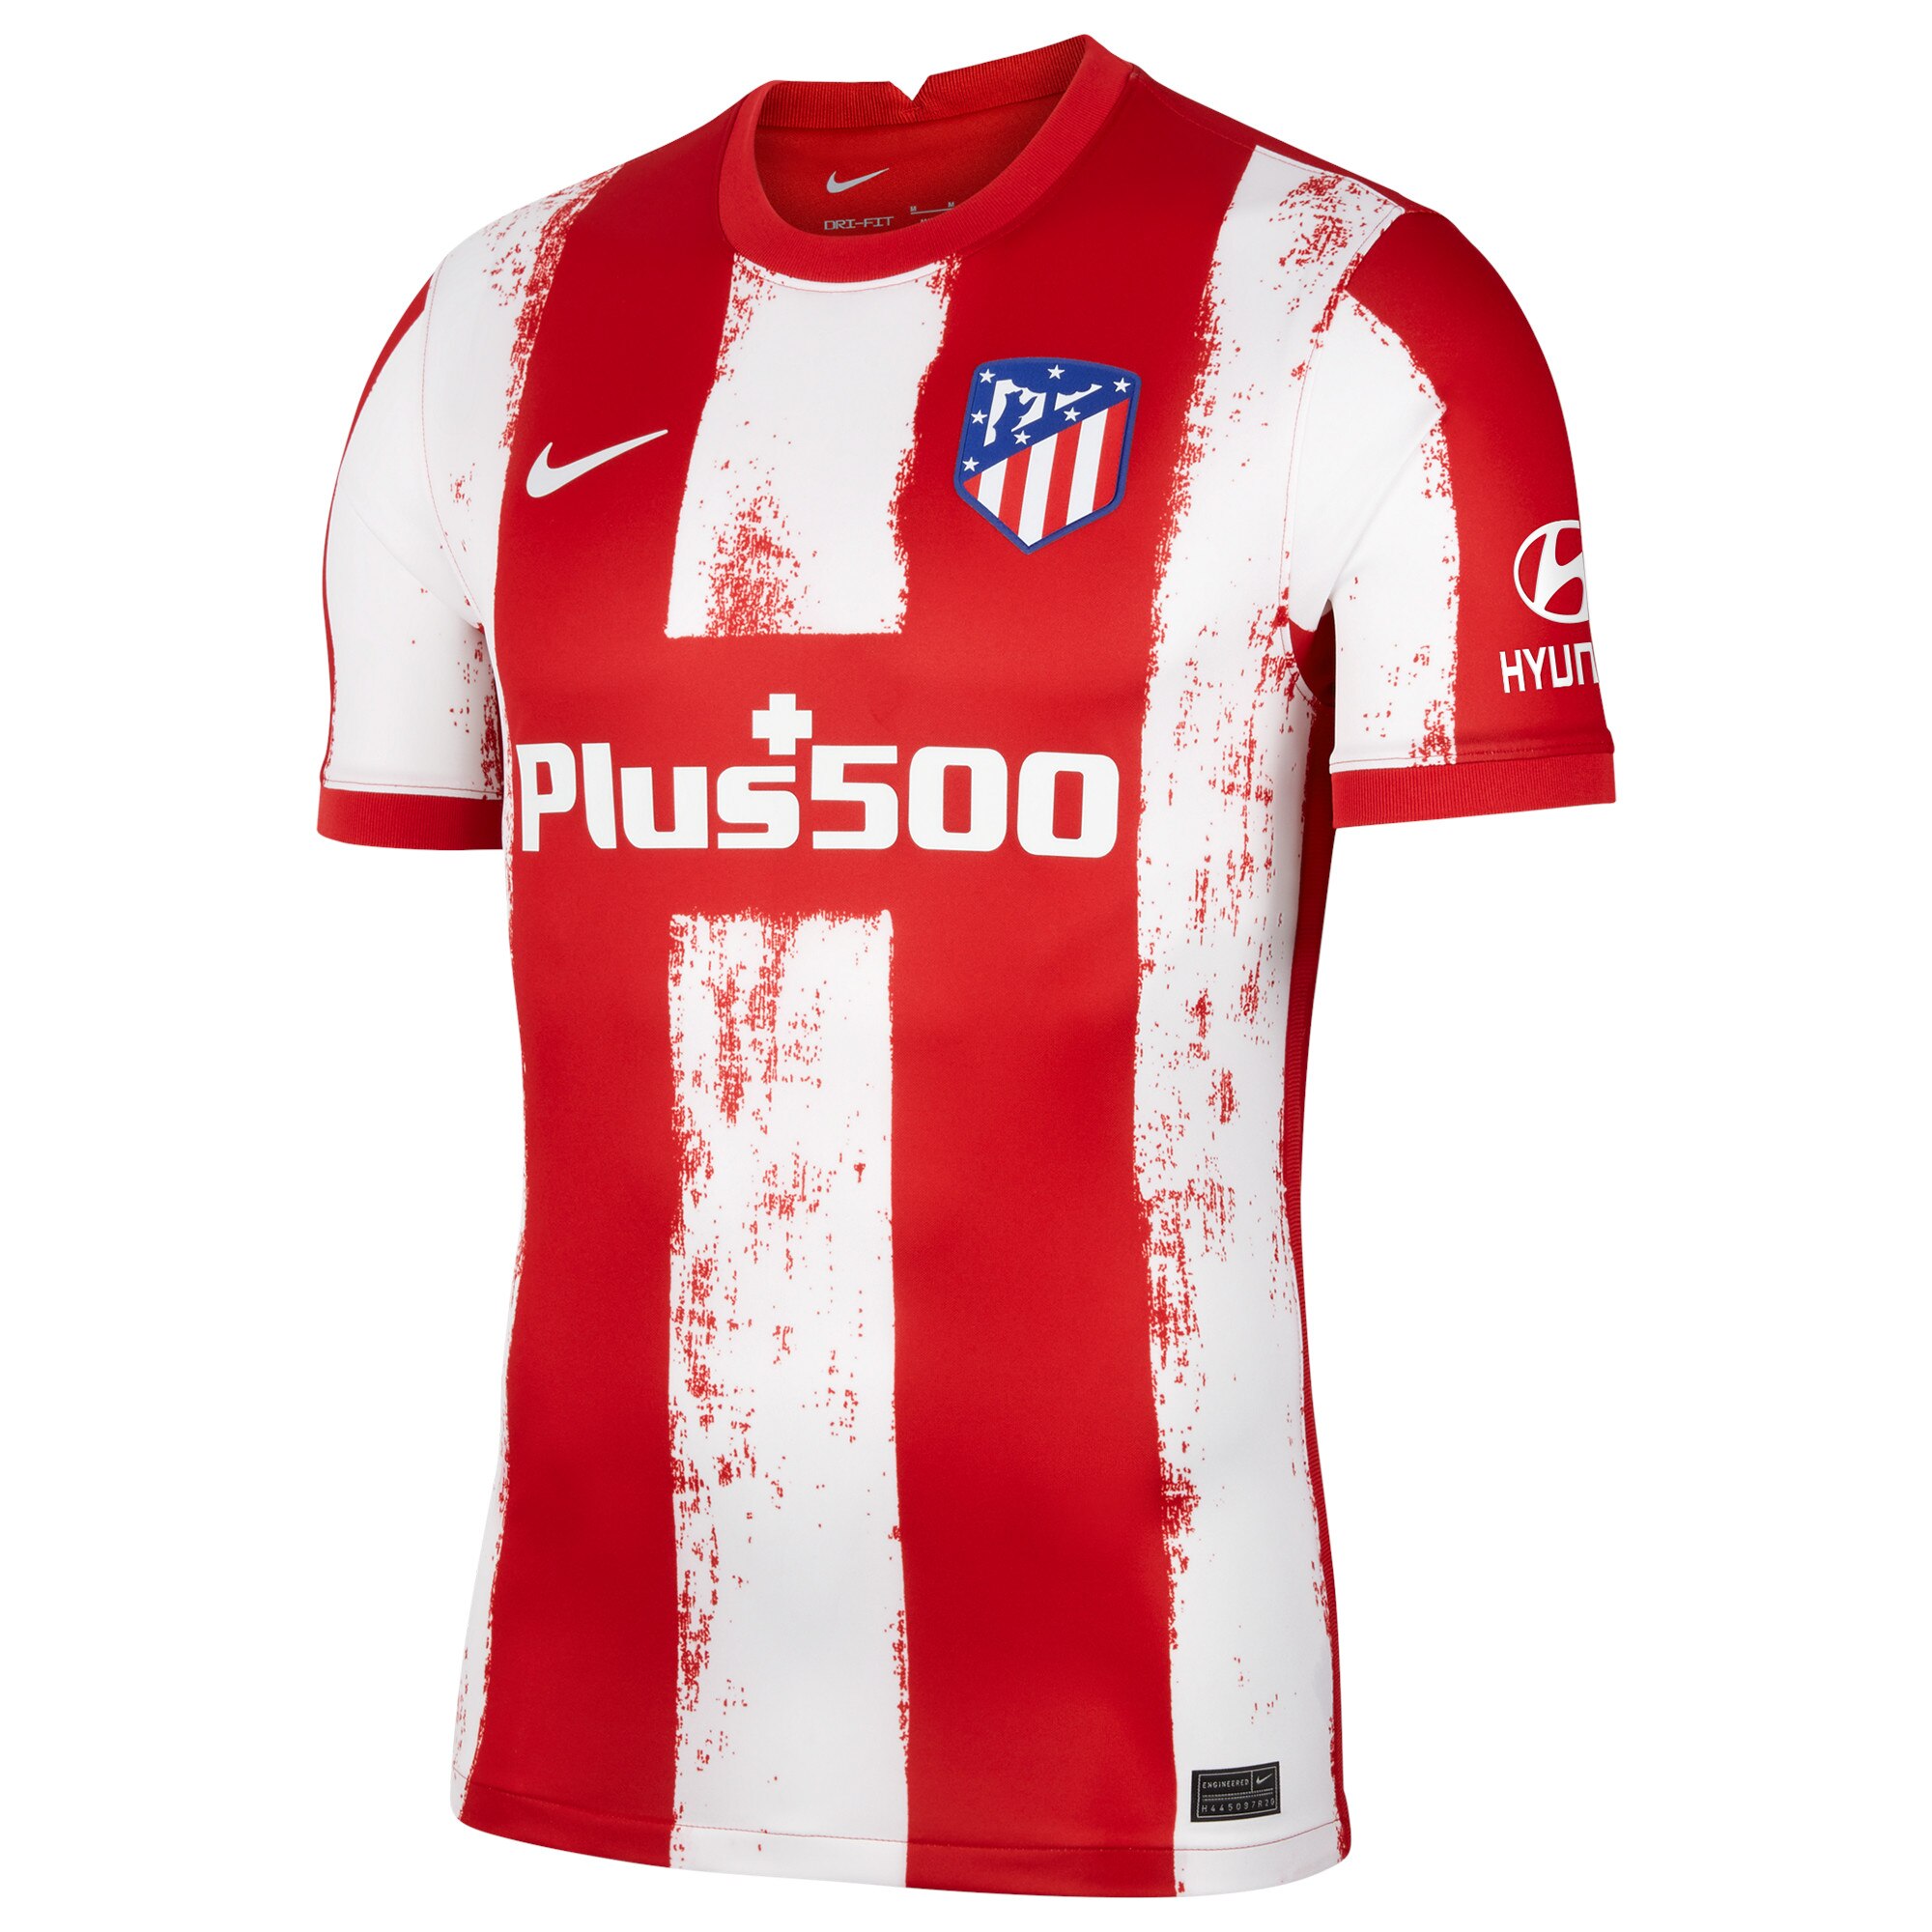 Atlético de Madrid Home Stadium Shirt 2021-22 with Cunha 19 printing